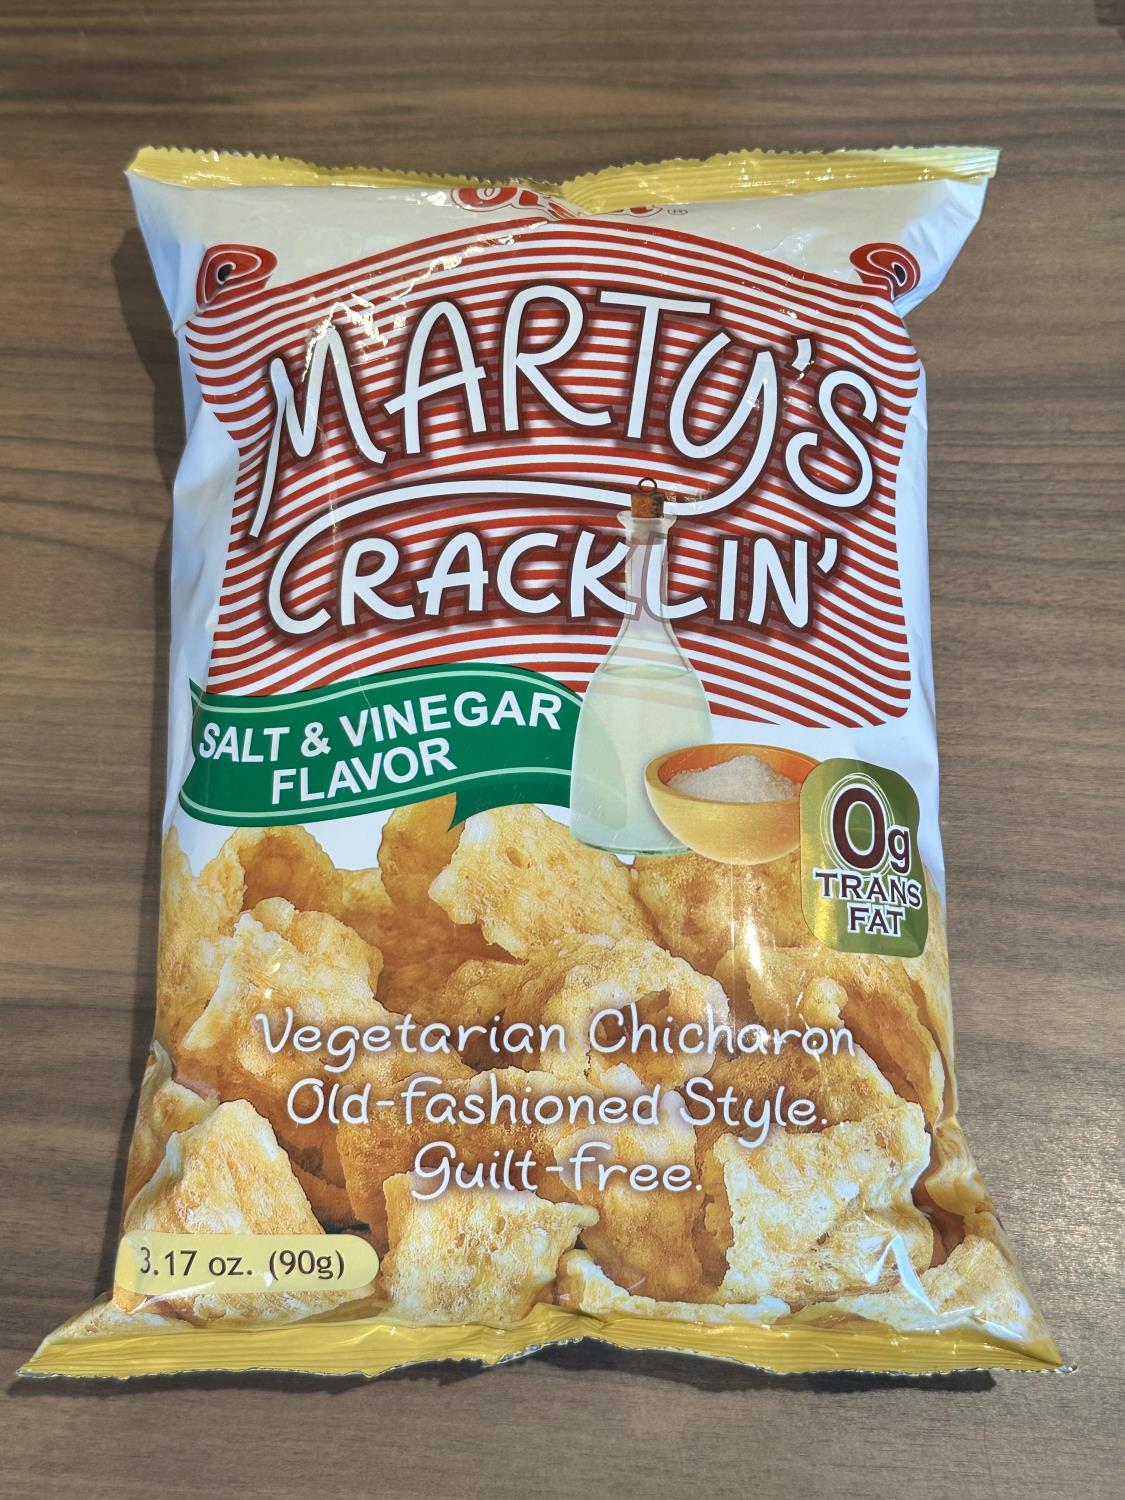 Marty's cracklin salt vinegar